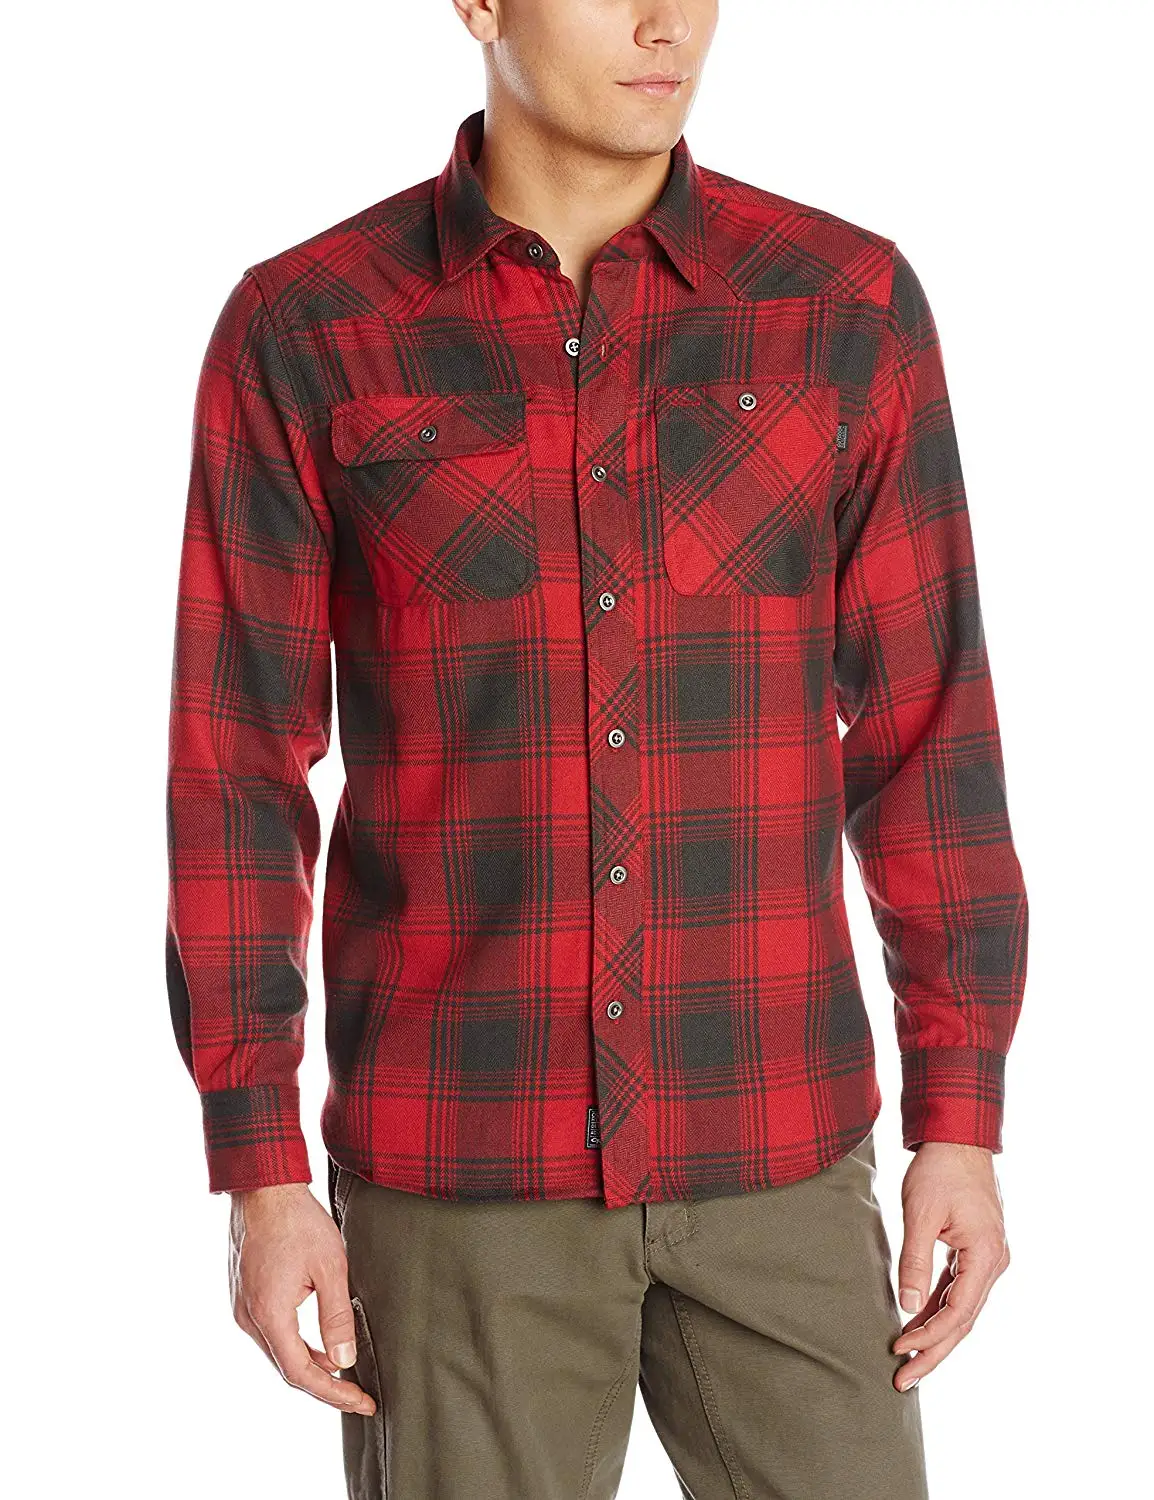 Outdoor Research Men's Feedback Flannel Shirt.